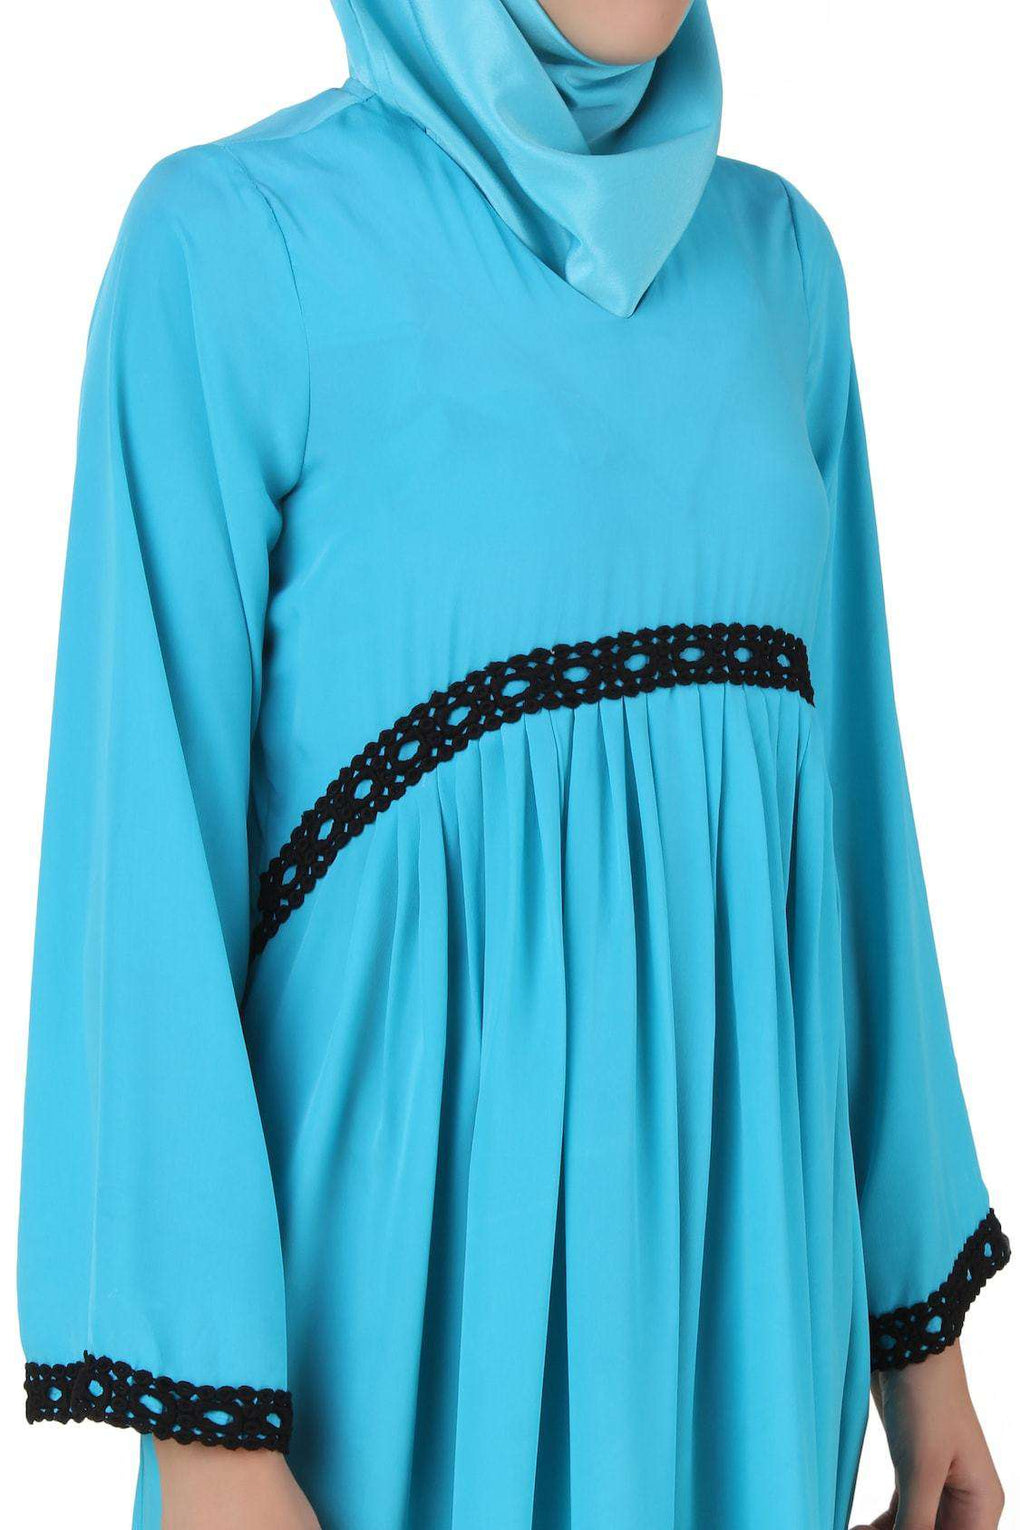 Makalah Maternity Turquoise Crepe Abaya Design